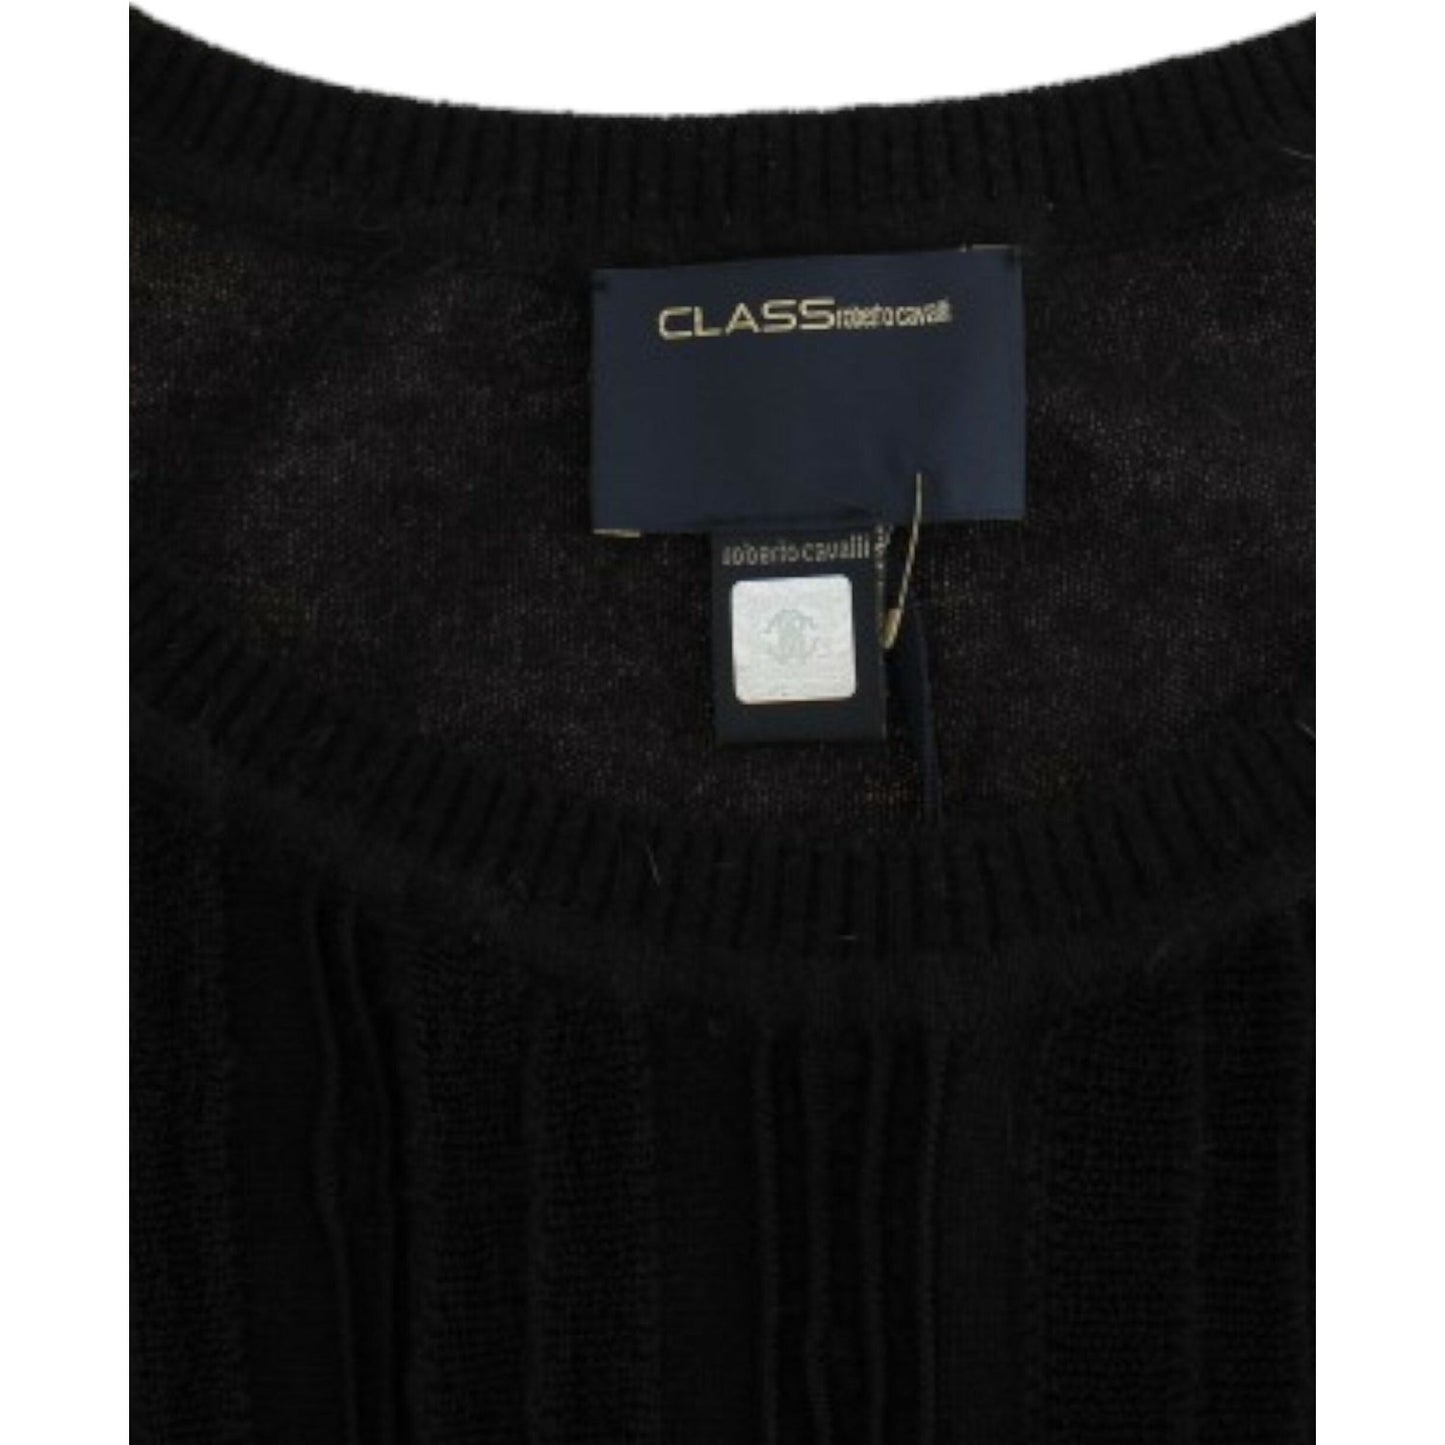 Cavalli Elegant Short Sleeved Black Jumper black-short-sleeved-jumper 9639-black-short-sleeved-jumper-2-5-scaled-6c534732-061.jpg